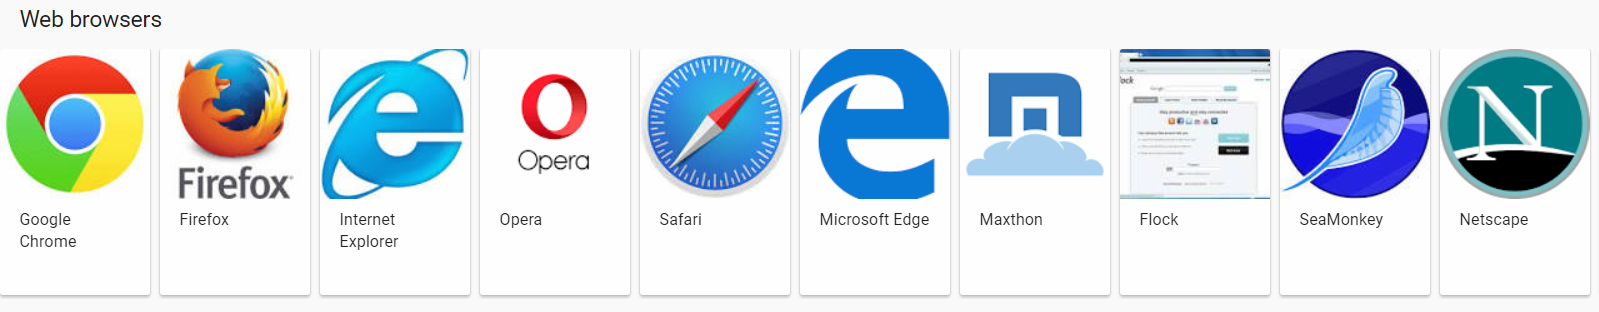 Интернет эксплорер edge. Microsoft Edge. Браузер Microsoft. Эволюция Microsoft Edge. Microsoft Edge (Internet Explorer ) быстродействие.